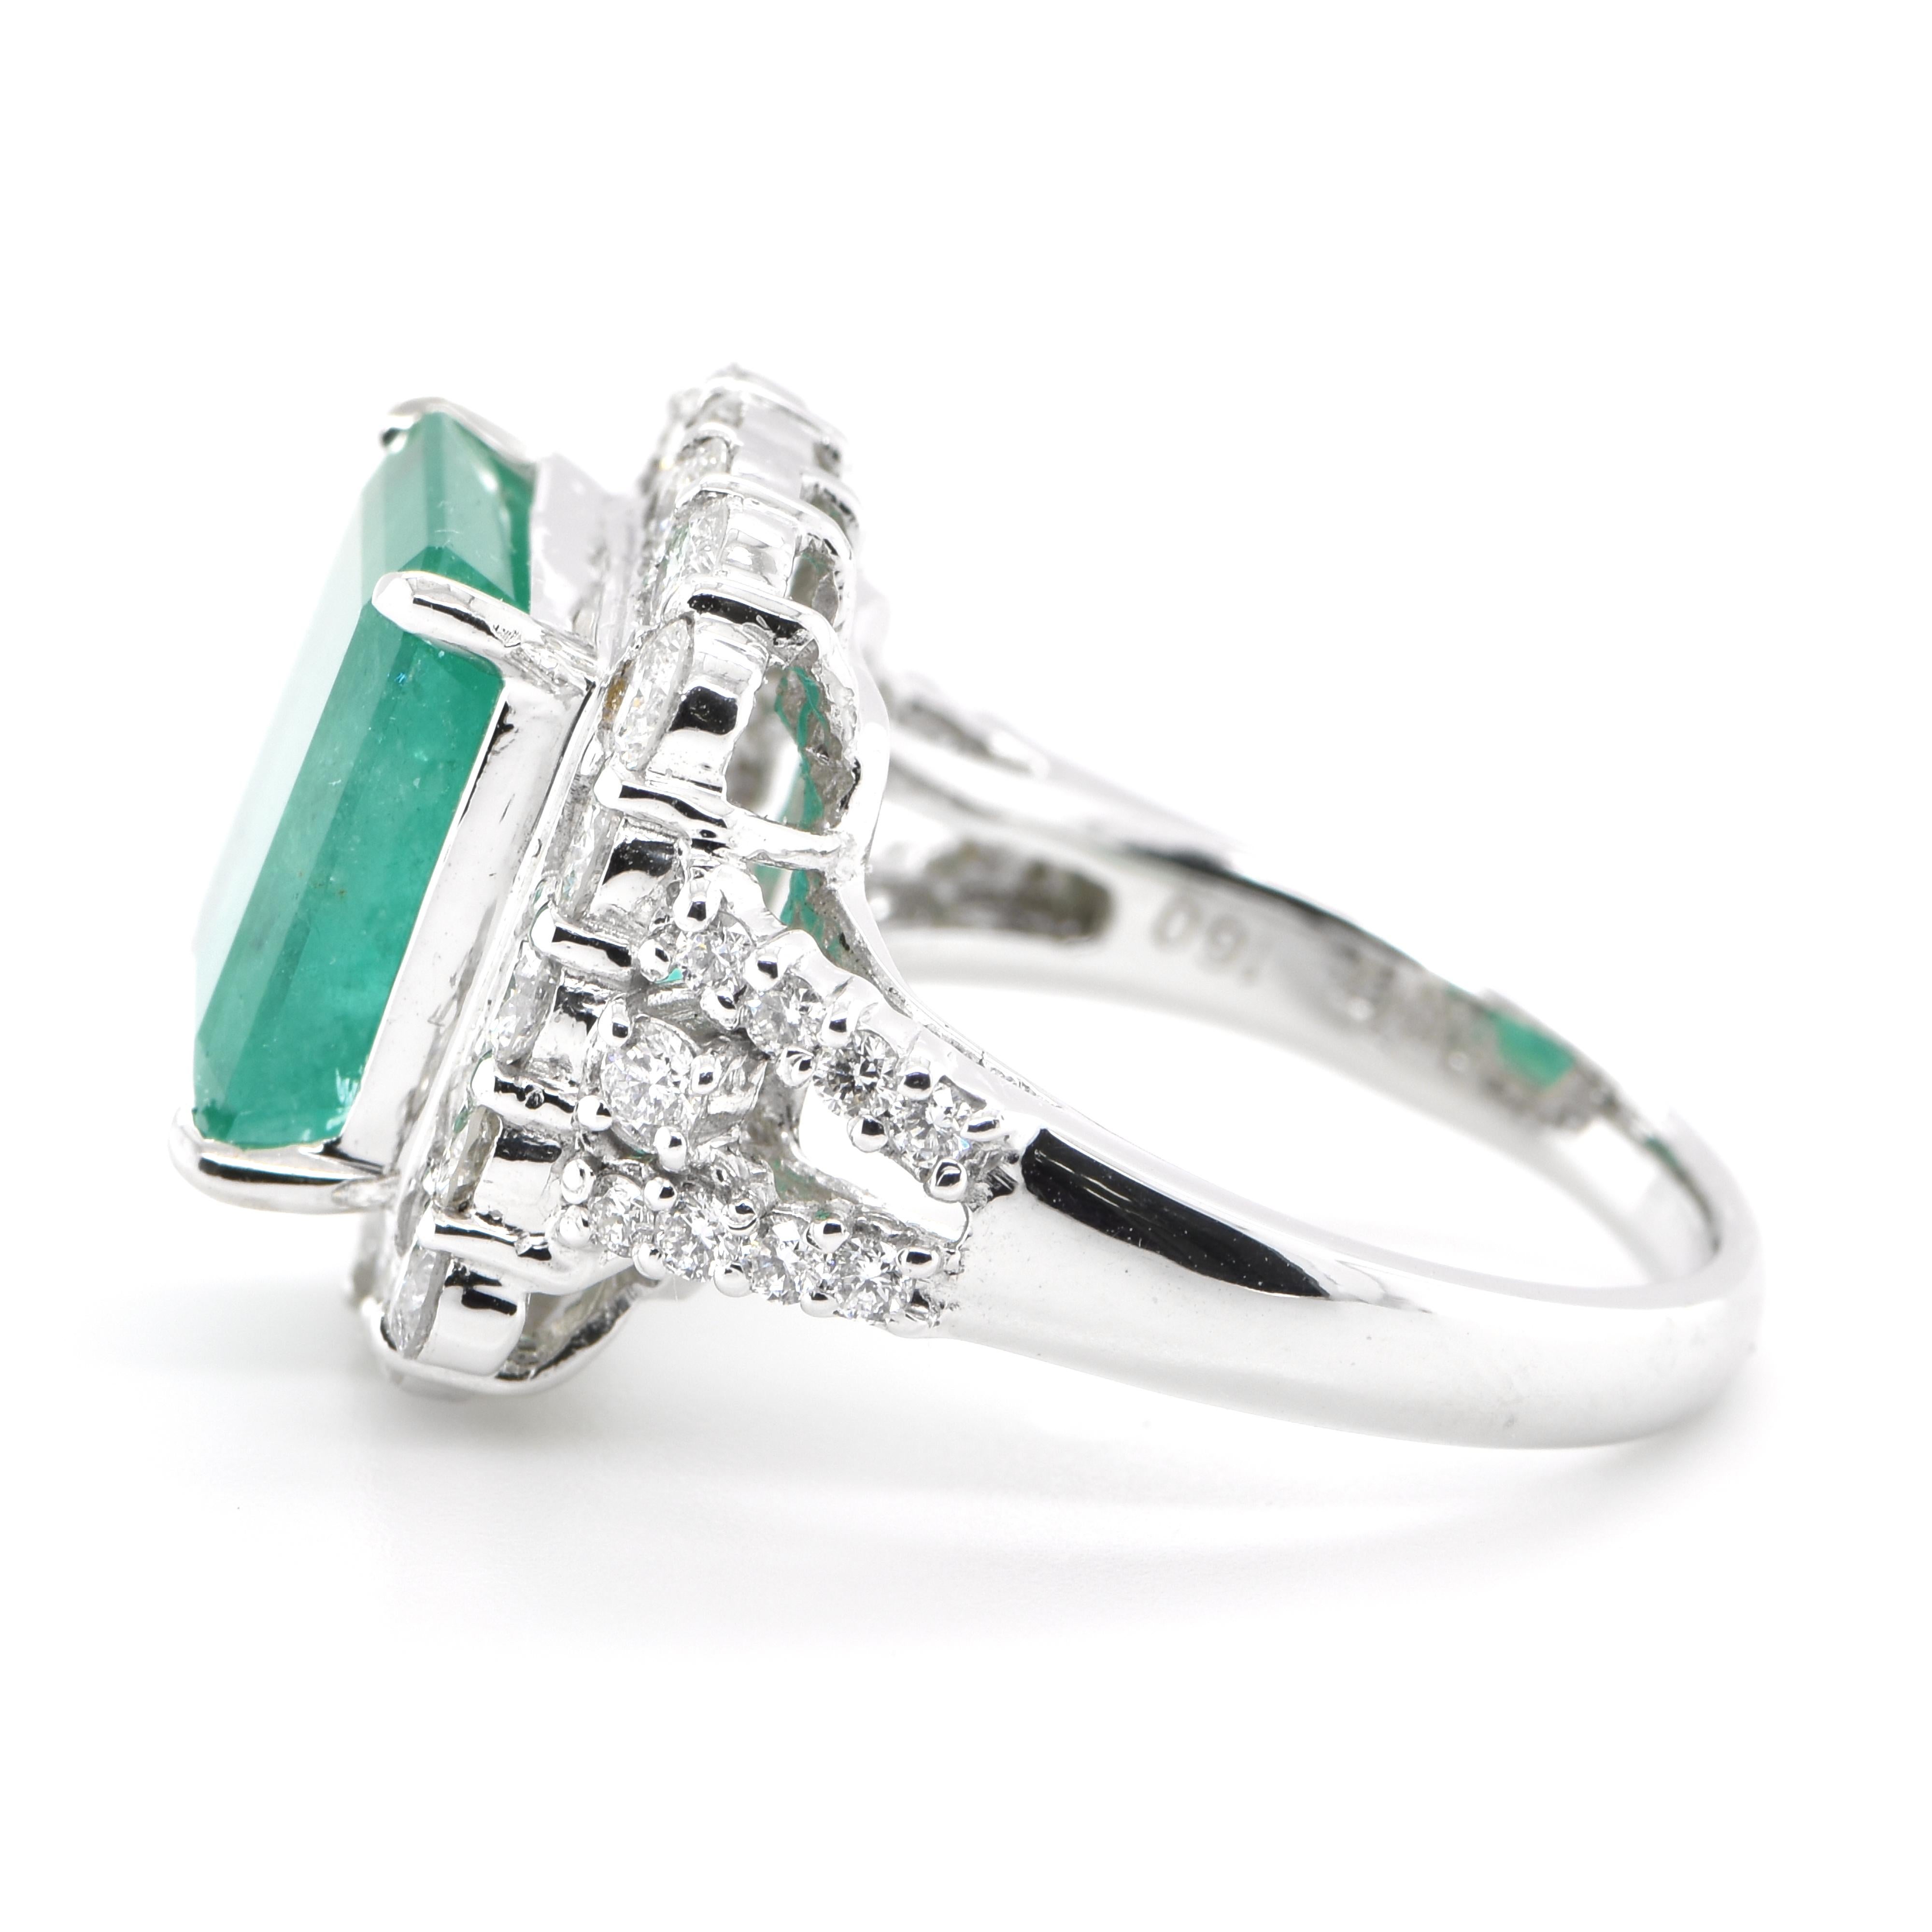 Modern 6.57 Carat Natural Emerald and Diamond Cocktail Ring Set in Platinum